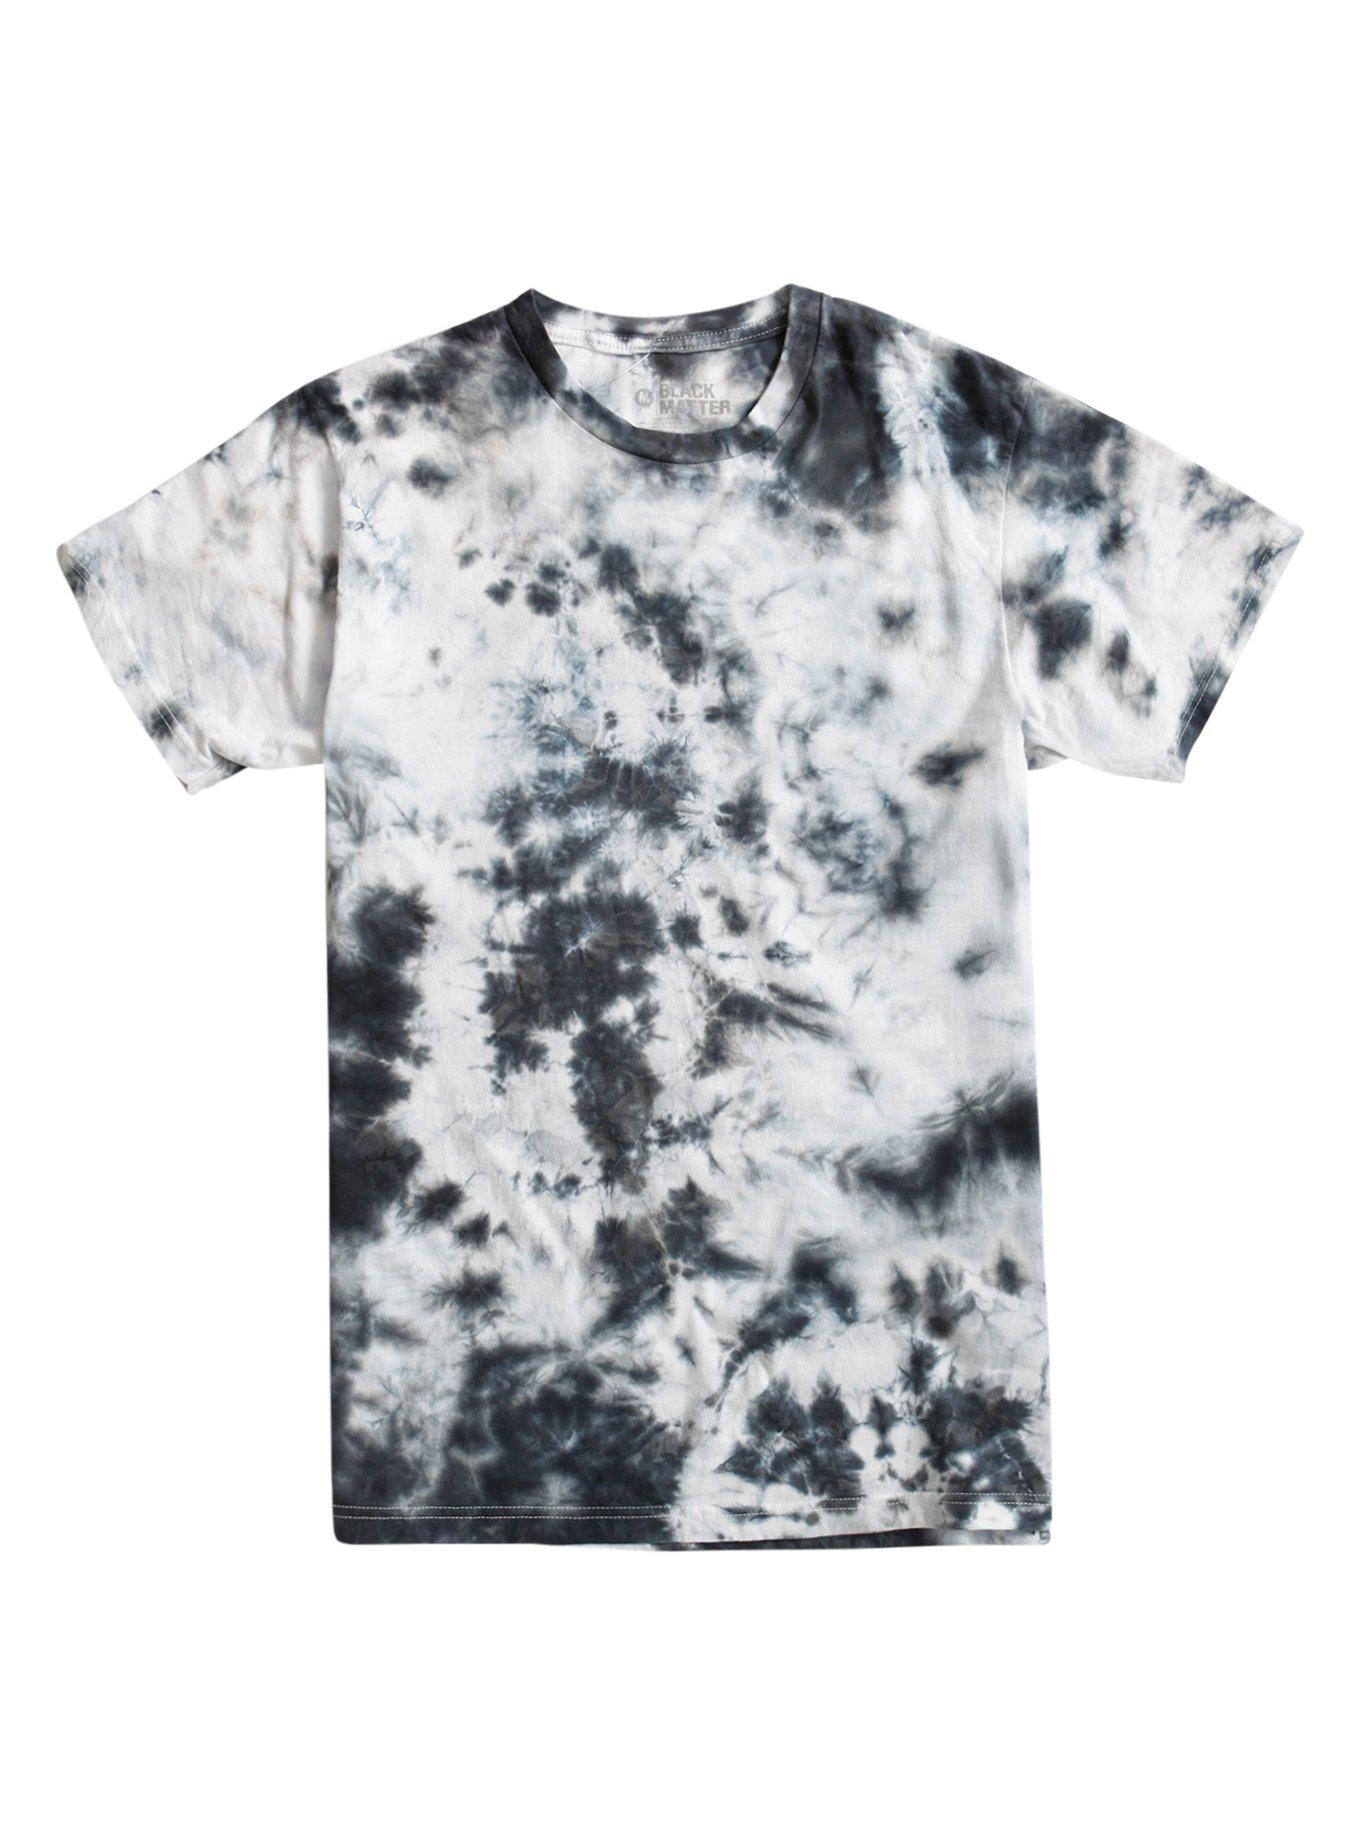 Black & White Tie Dye T-Shirt | Hot Topic